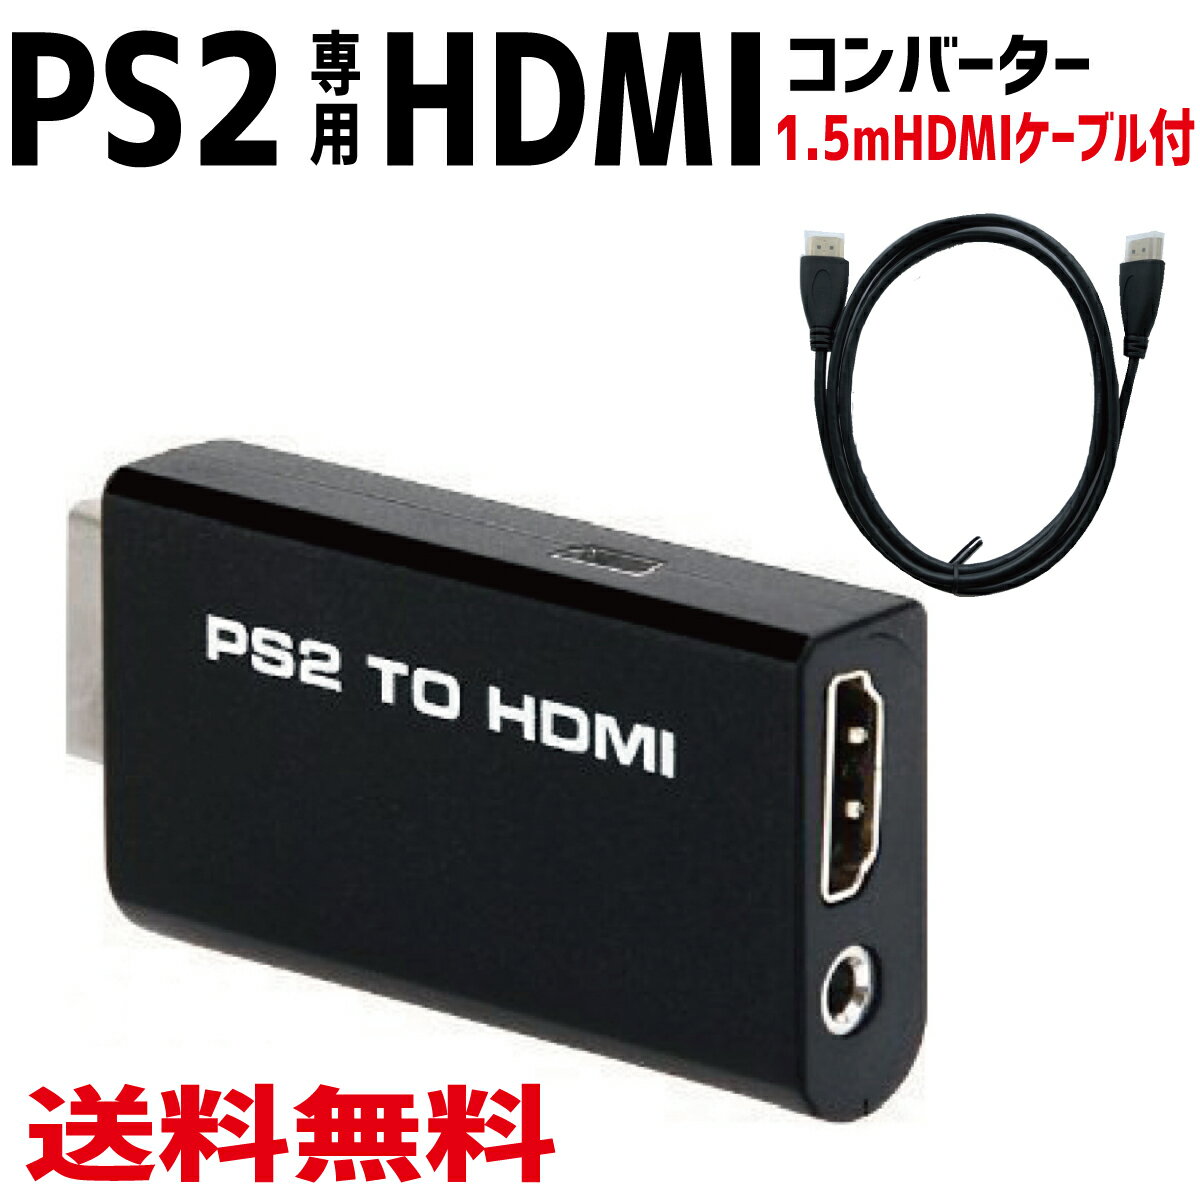  P2{   PS2 TO HDMI Ro[^[ PS2p PS2 to HDMI ڑRlN^ ϊ A v^[ 1.5mHDMIP[ut